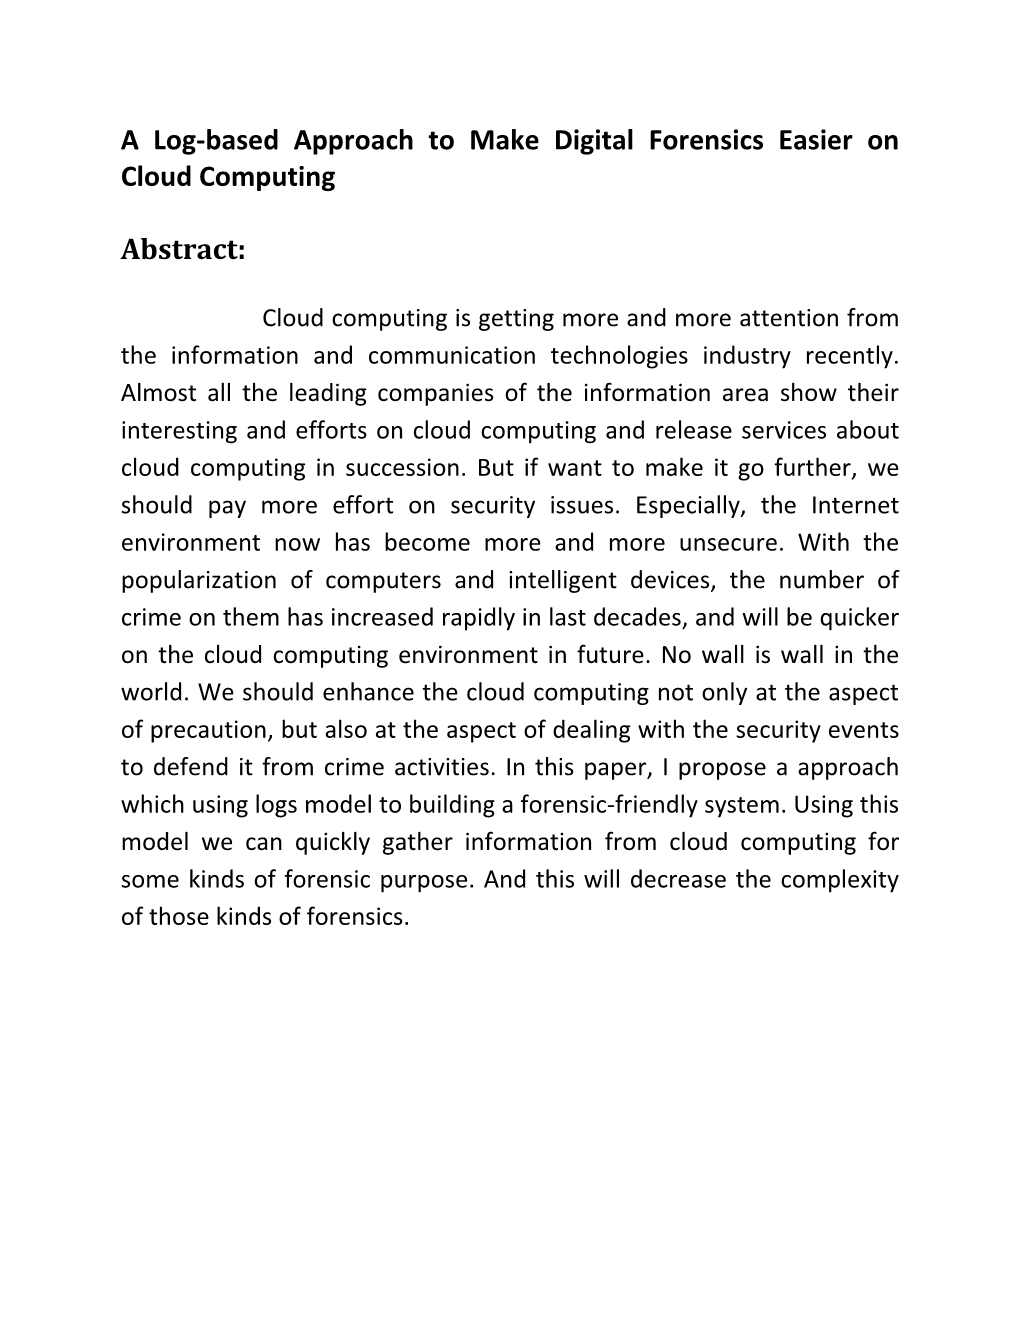 A Log-Based Approach to Make Digital Forensics Easier on Cloud Computing